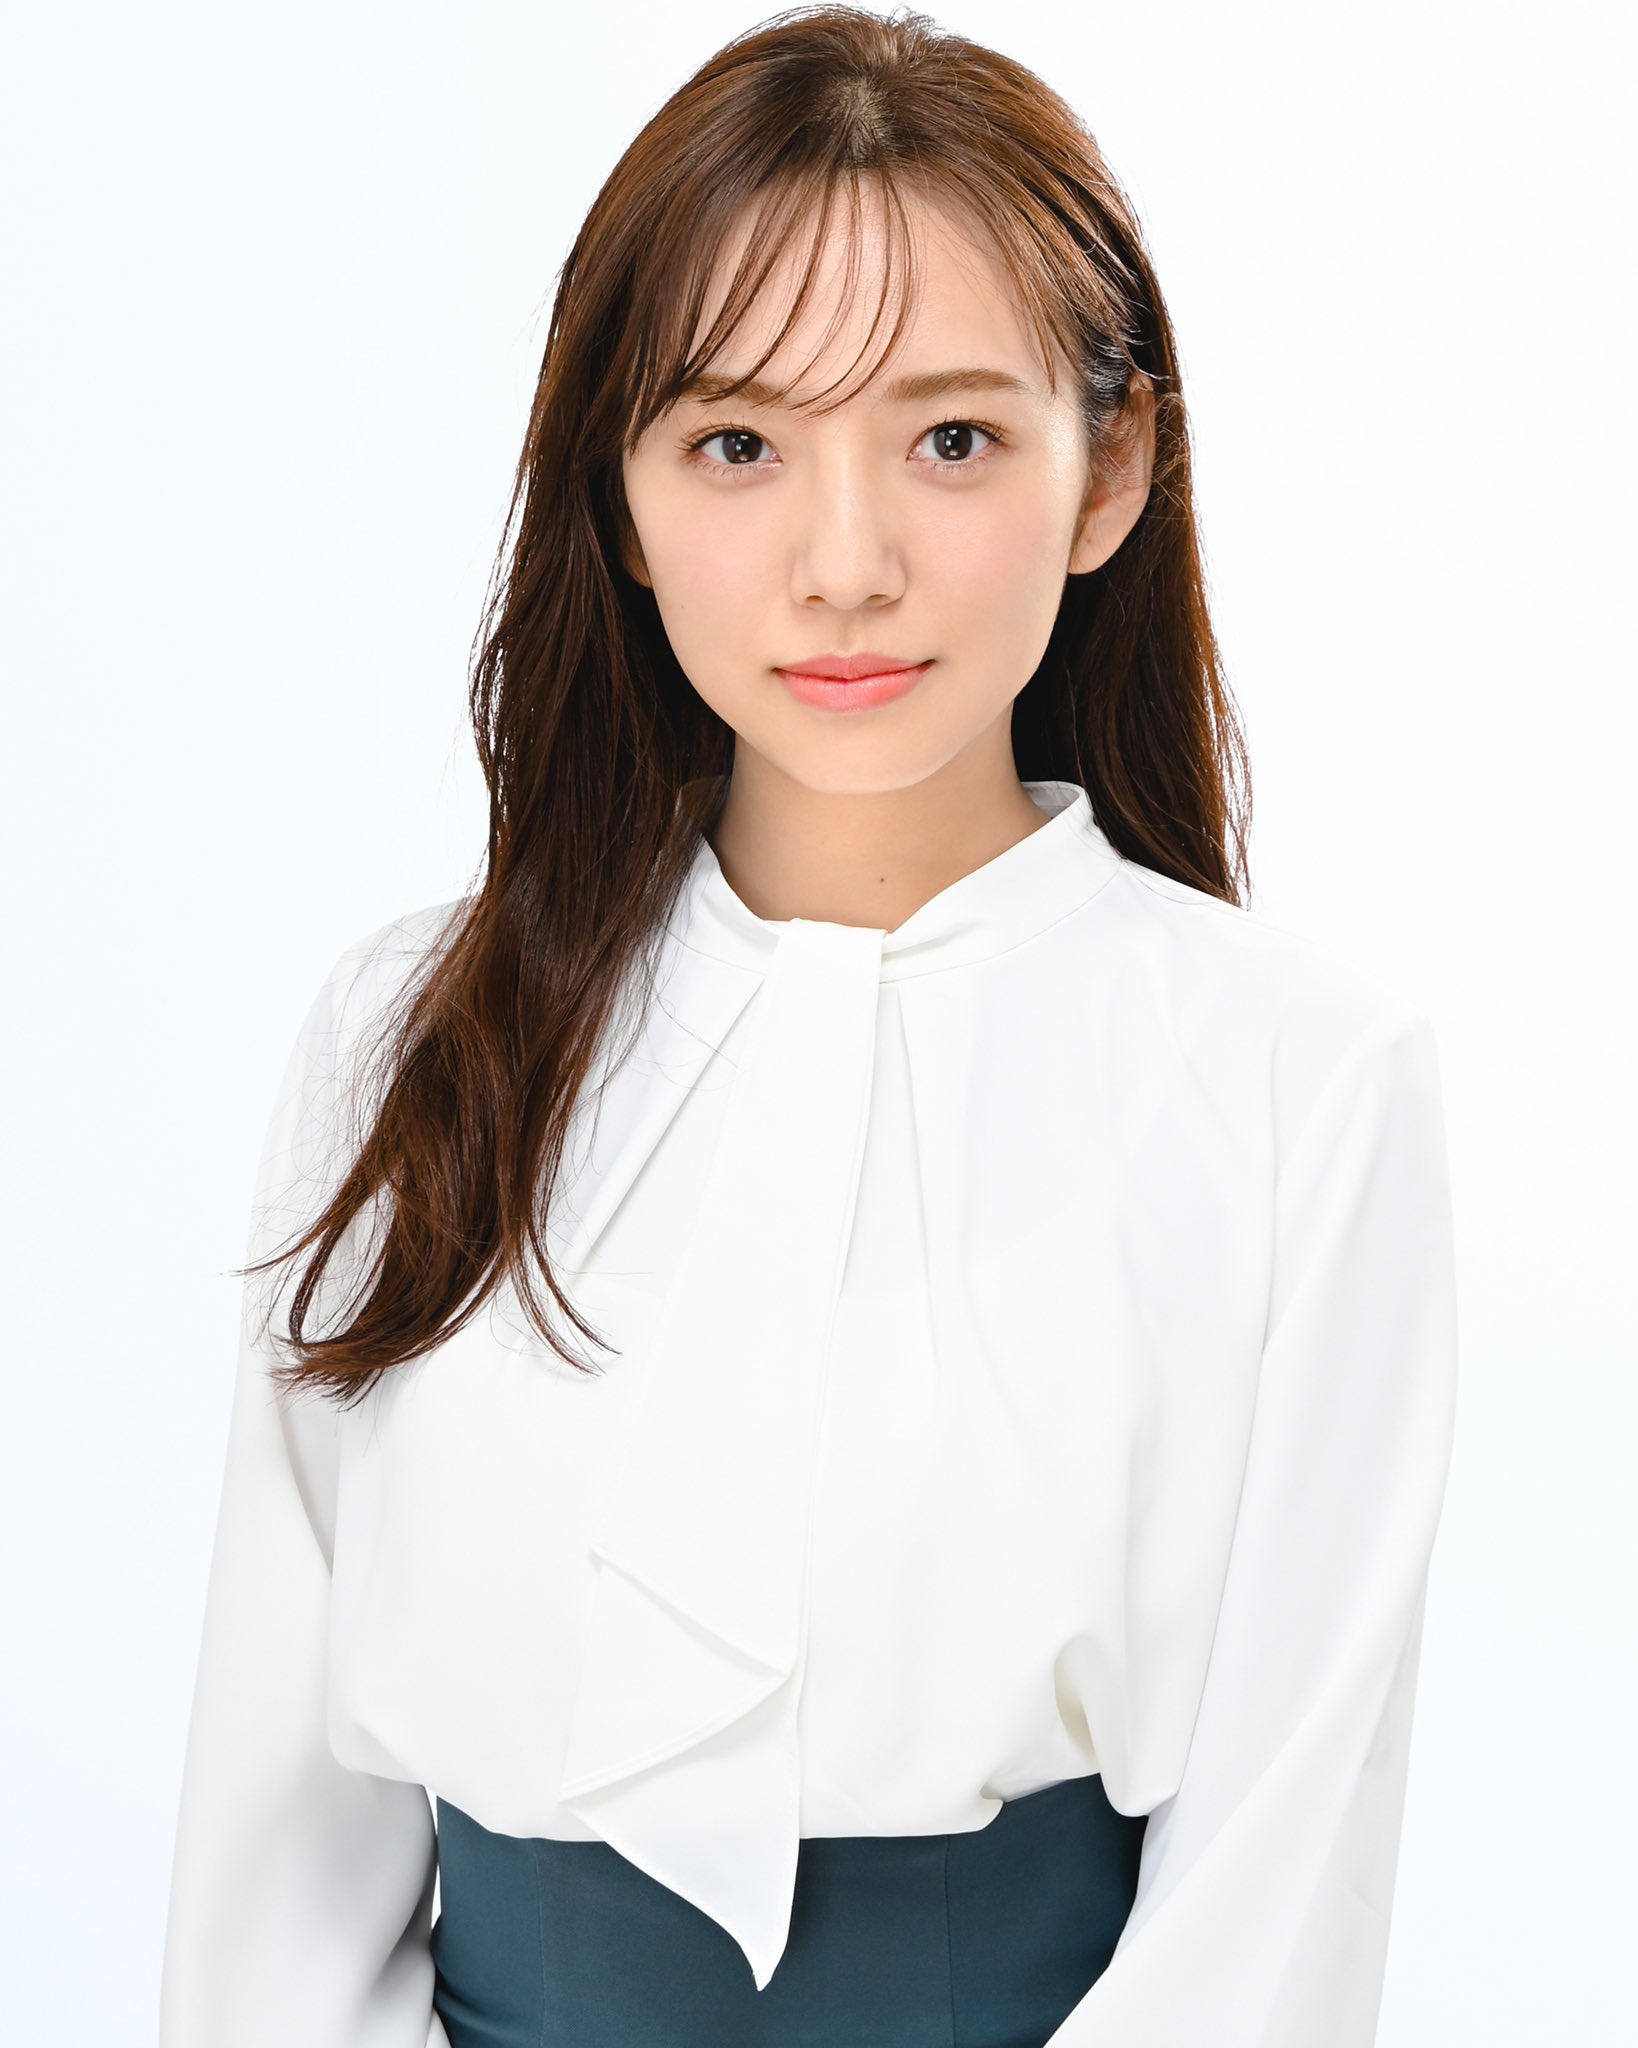 Shinuchi Mai - Photo de profil (3)